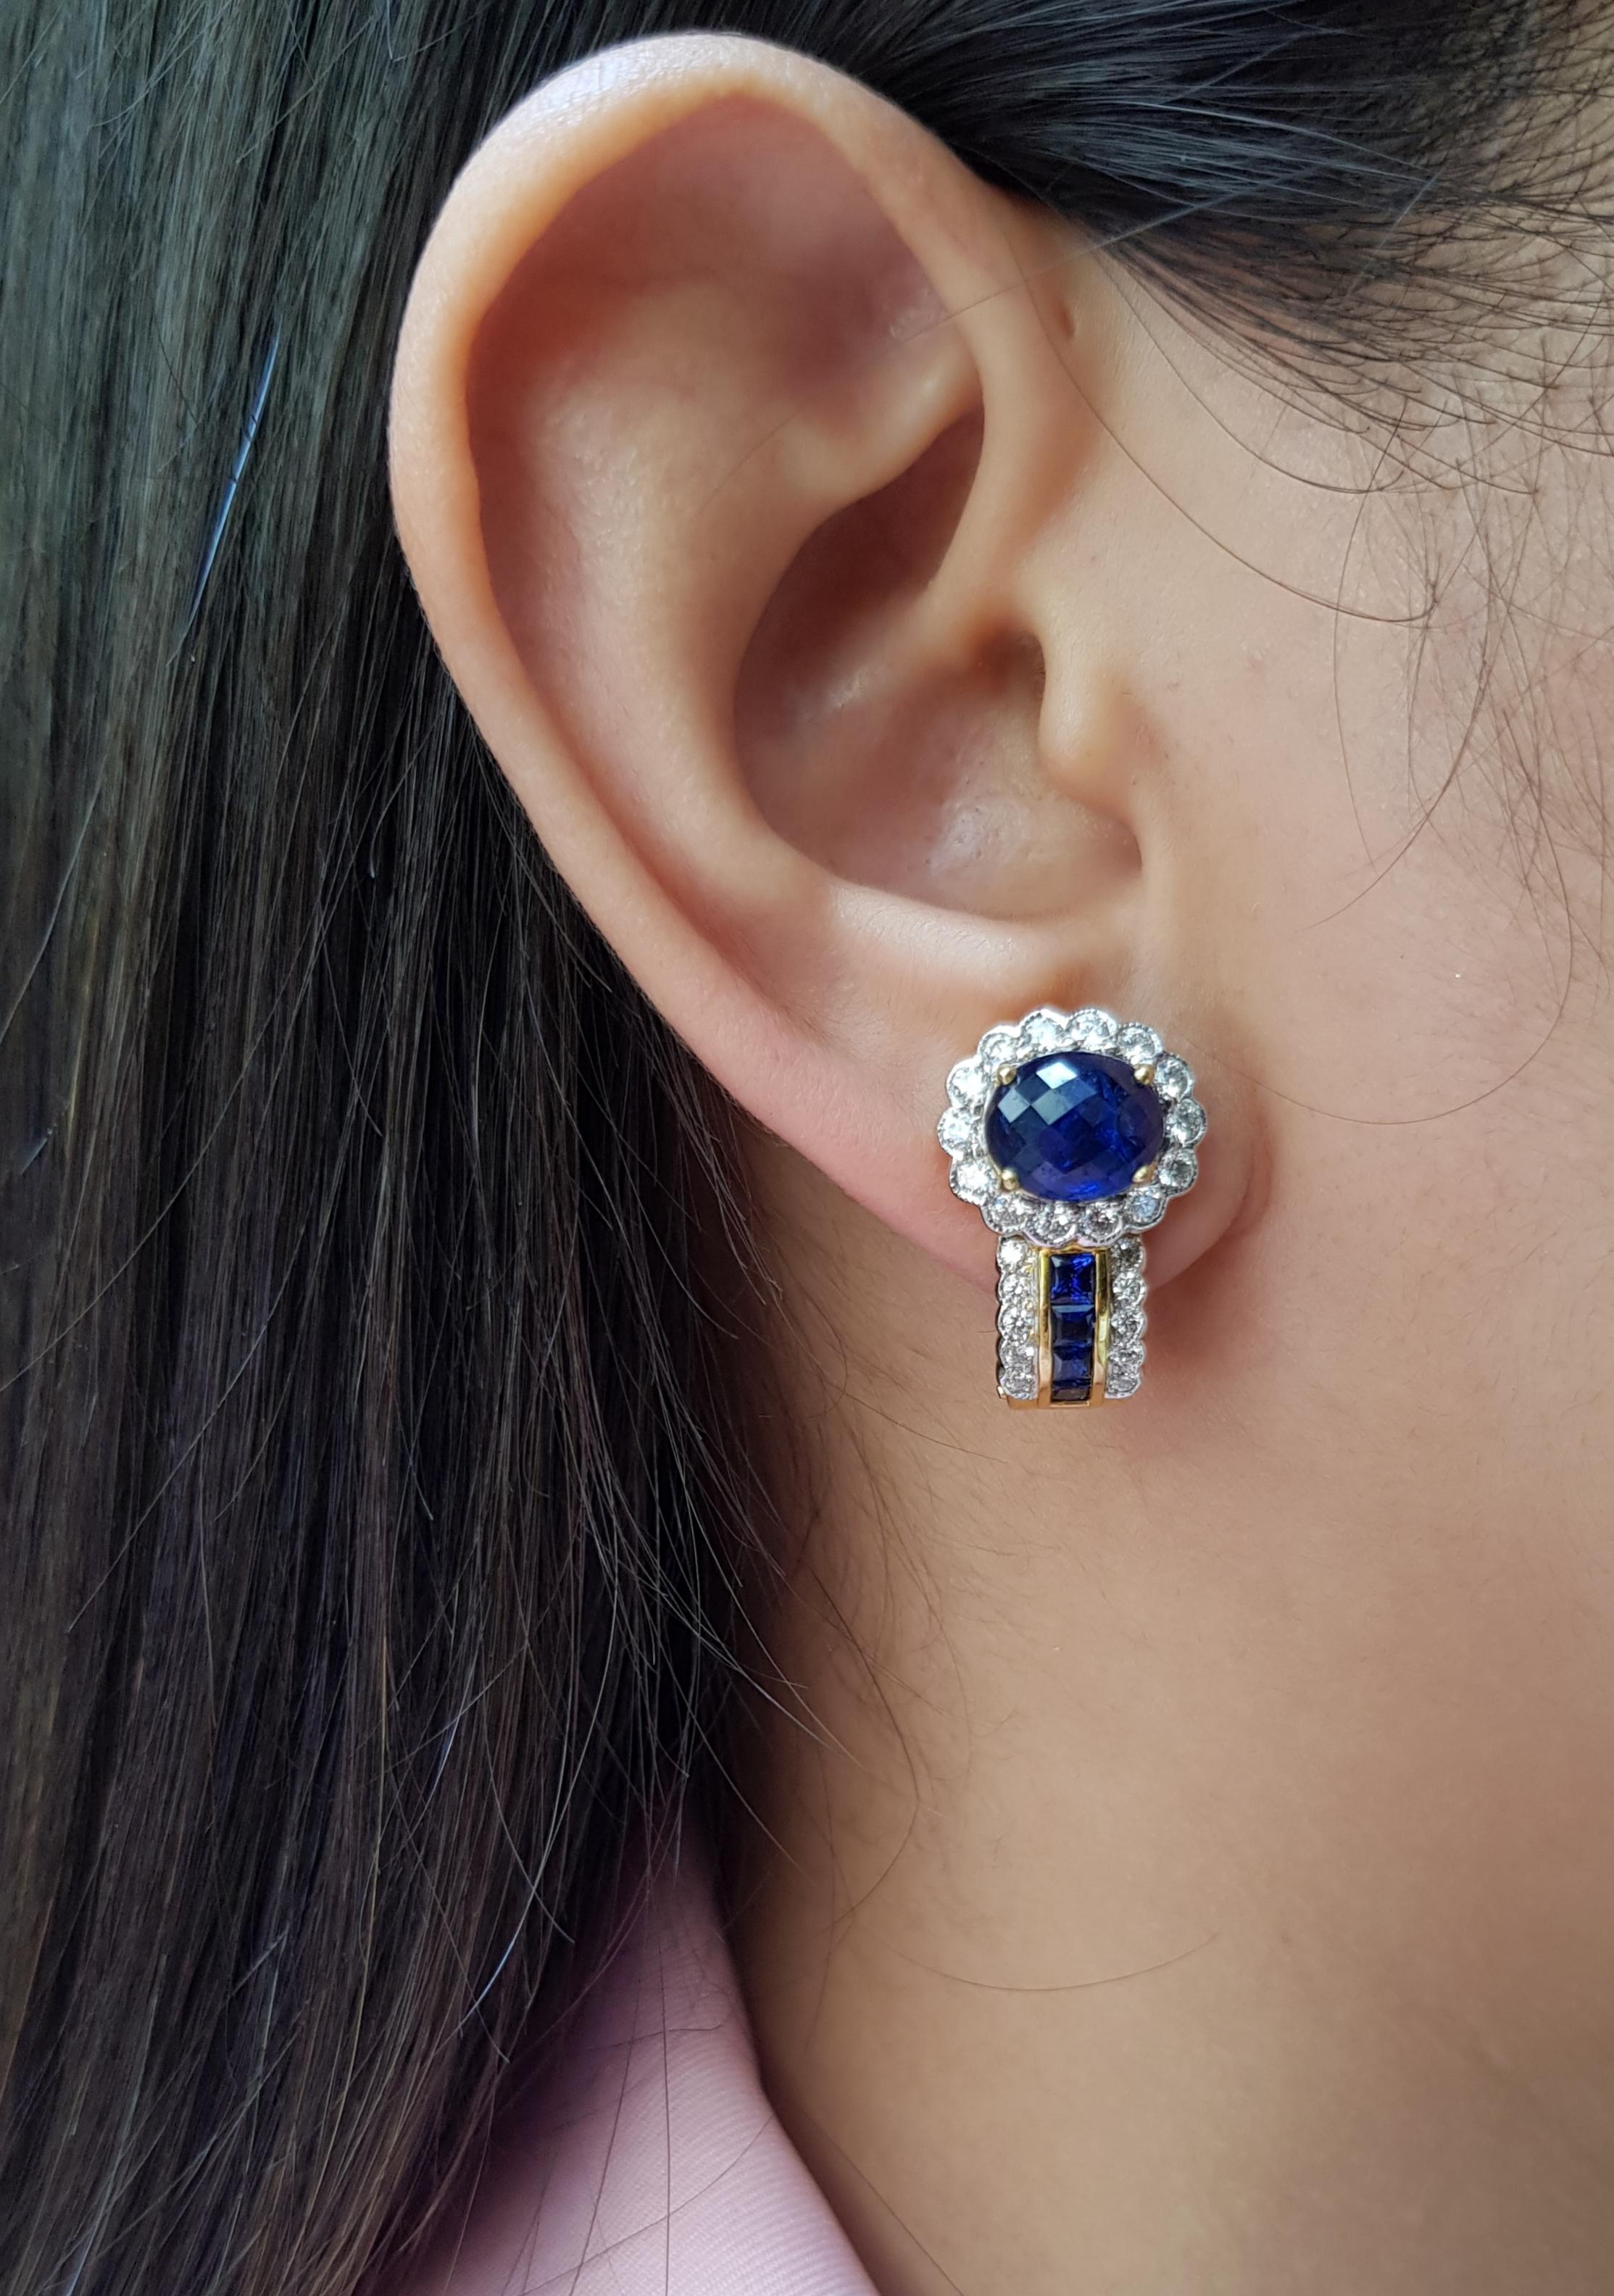 Cabochon Blue Sapphire 4.88 carats with Diamond 1.14 carats and Blue Sapphire 0.64 carat Earrings set in 18 Karat Gold Settings

Width: 1.3 cm
Length: 2.2 cm 

